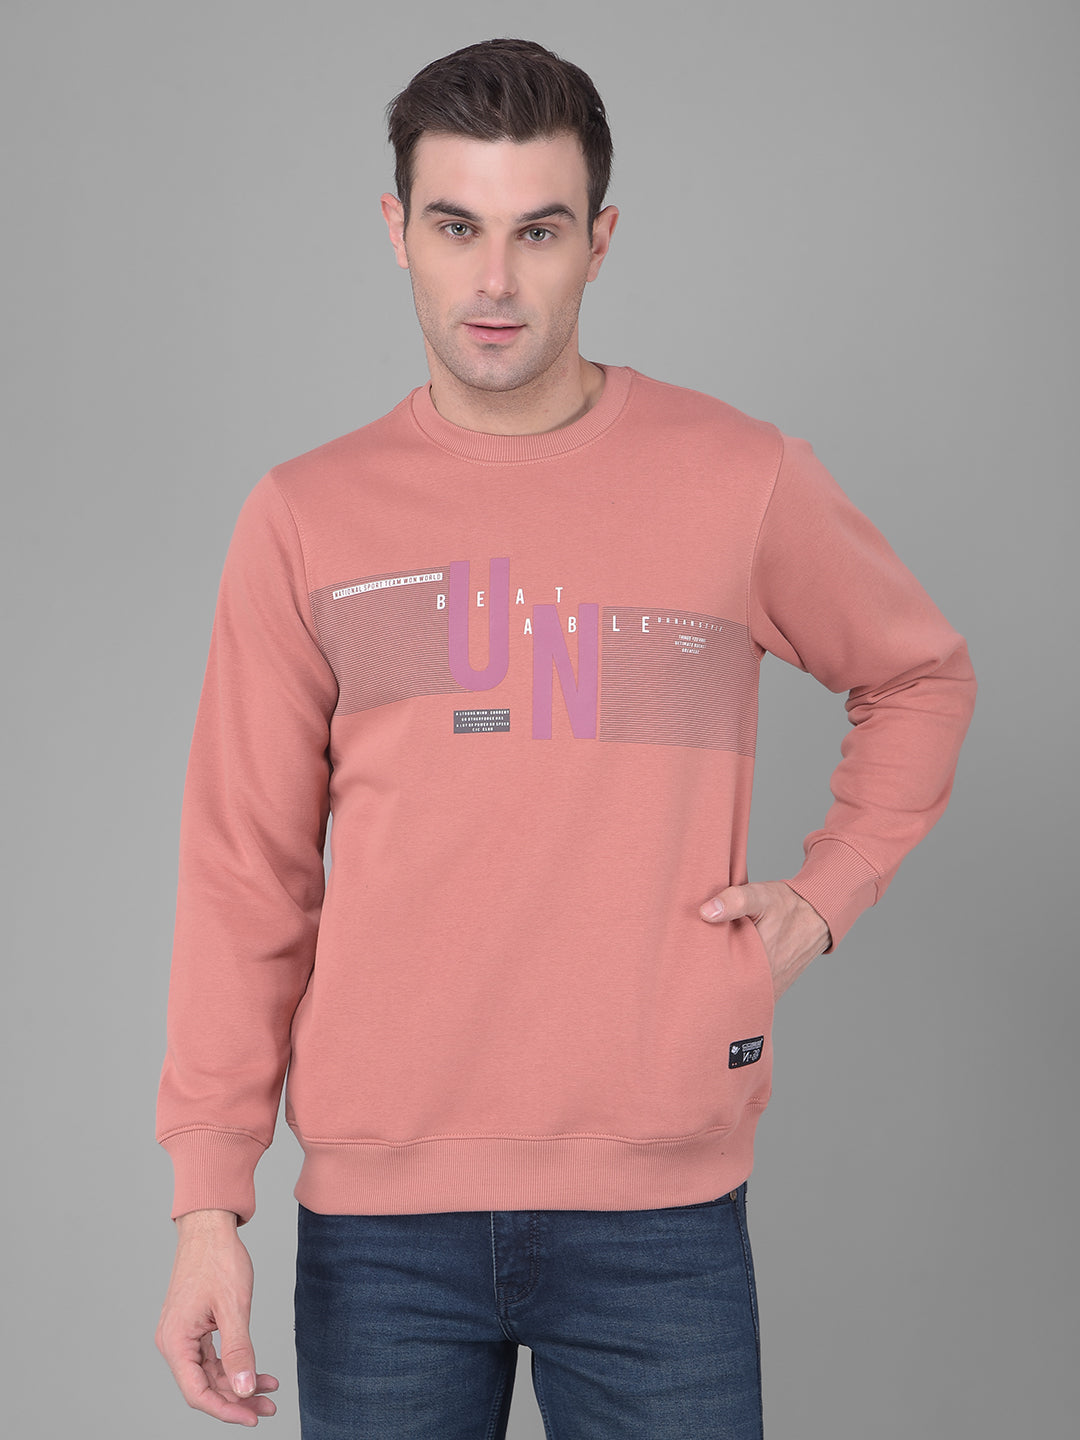 cobb australian coral printed round neck sweatshirt